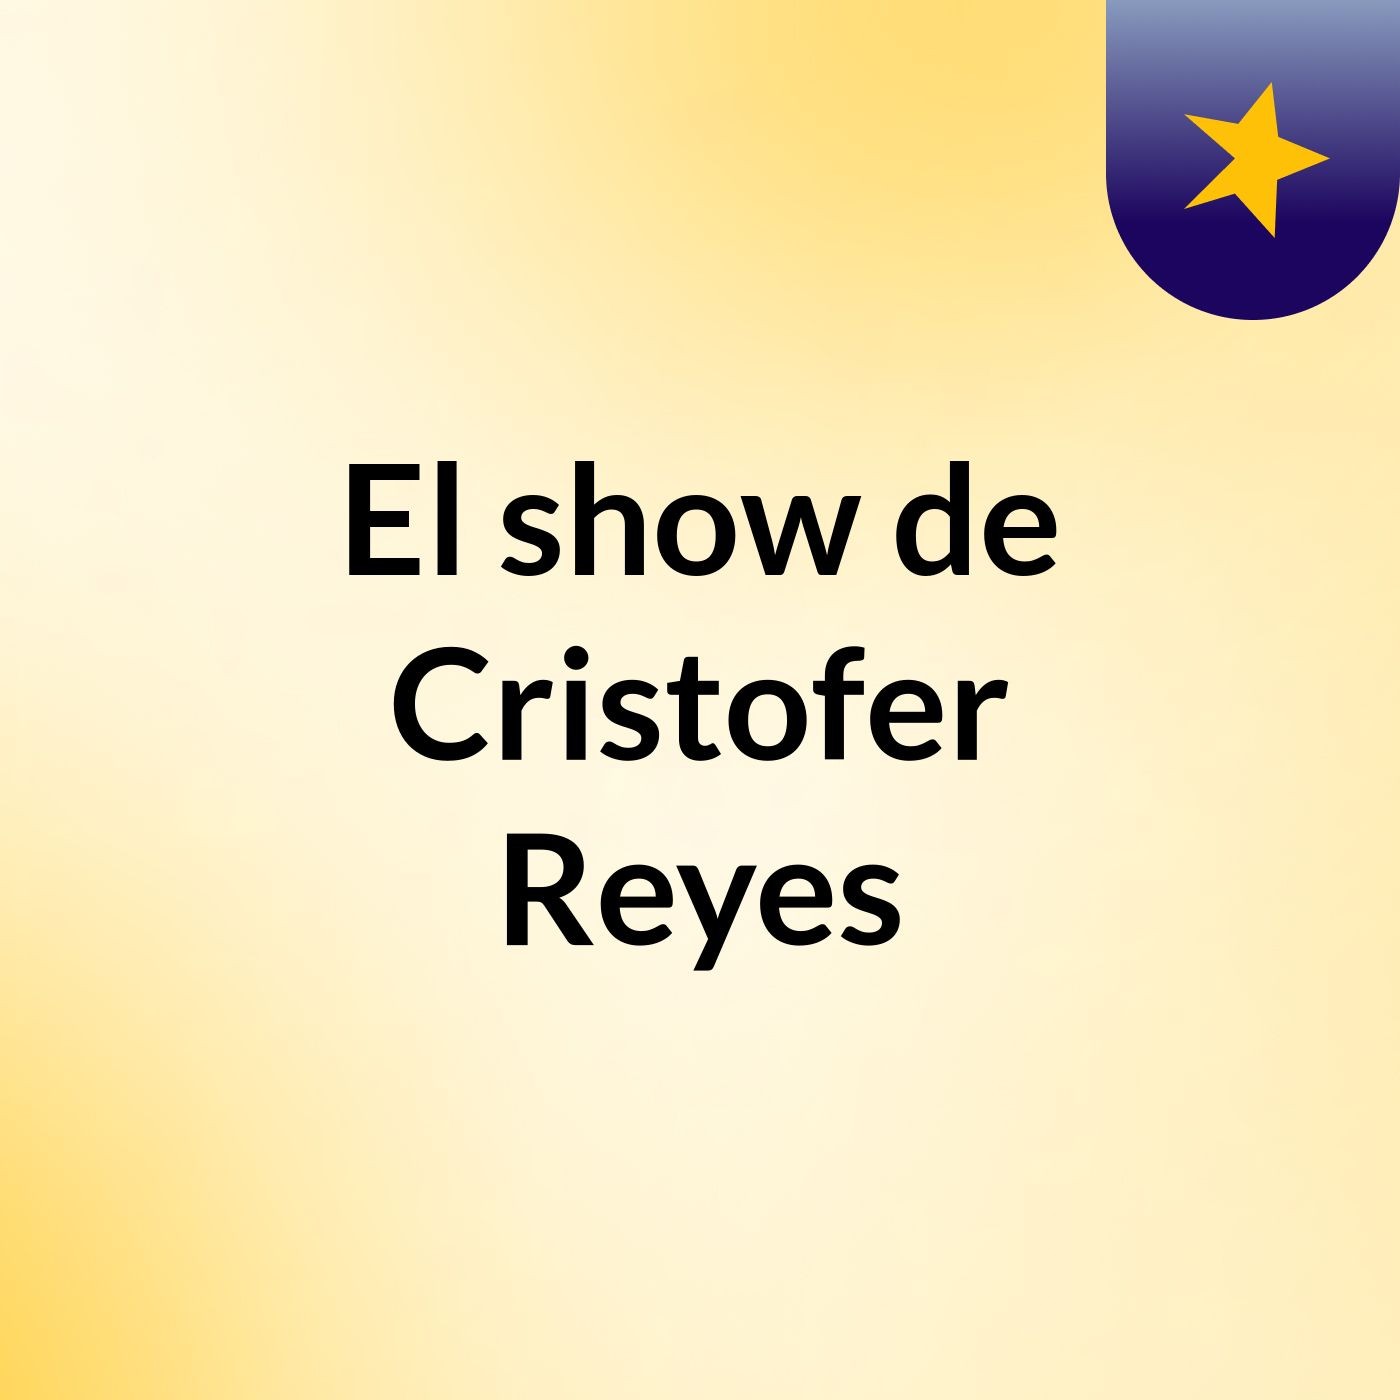 El show de Cristofer Reyes